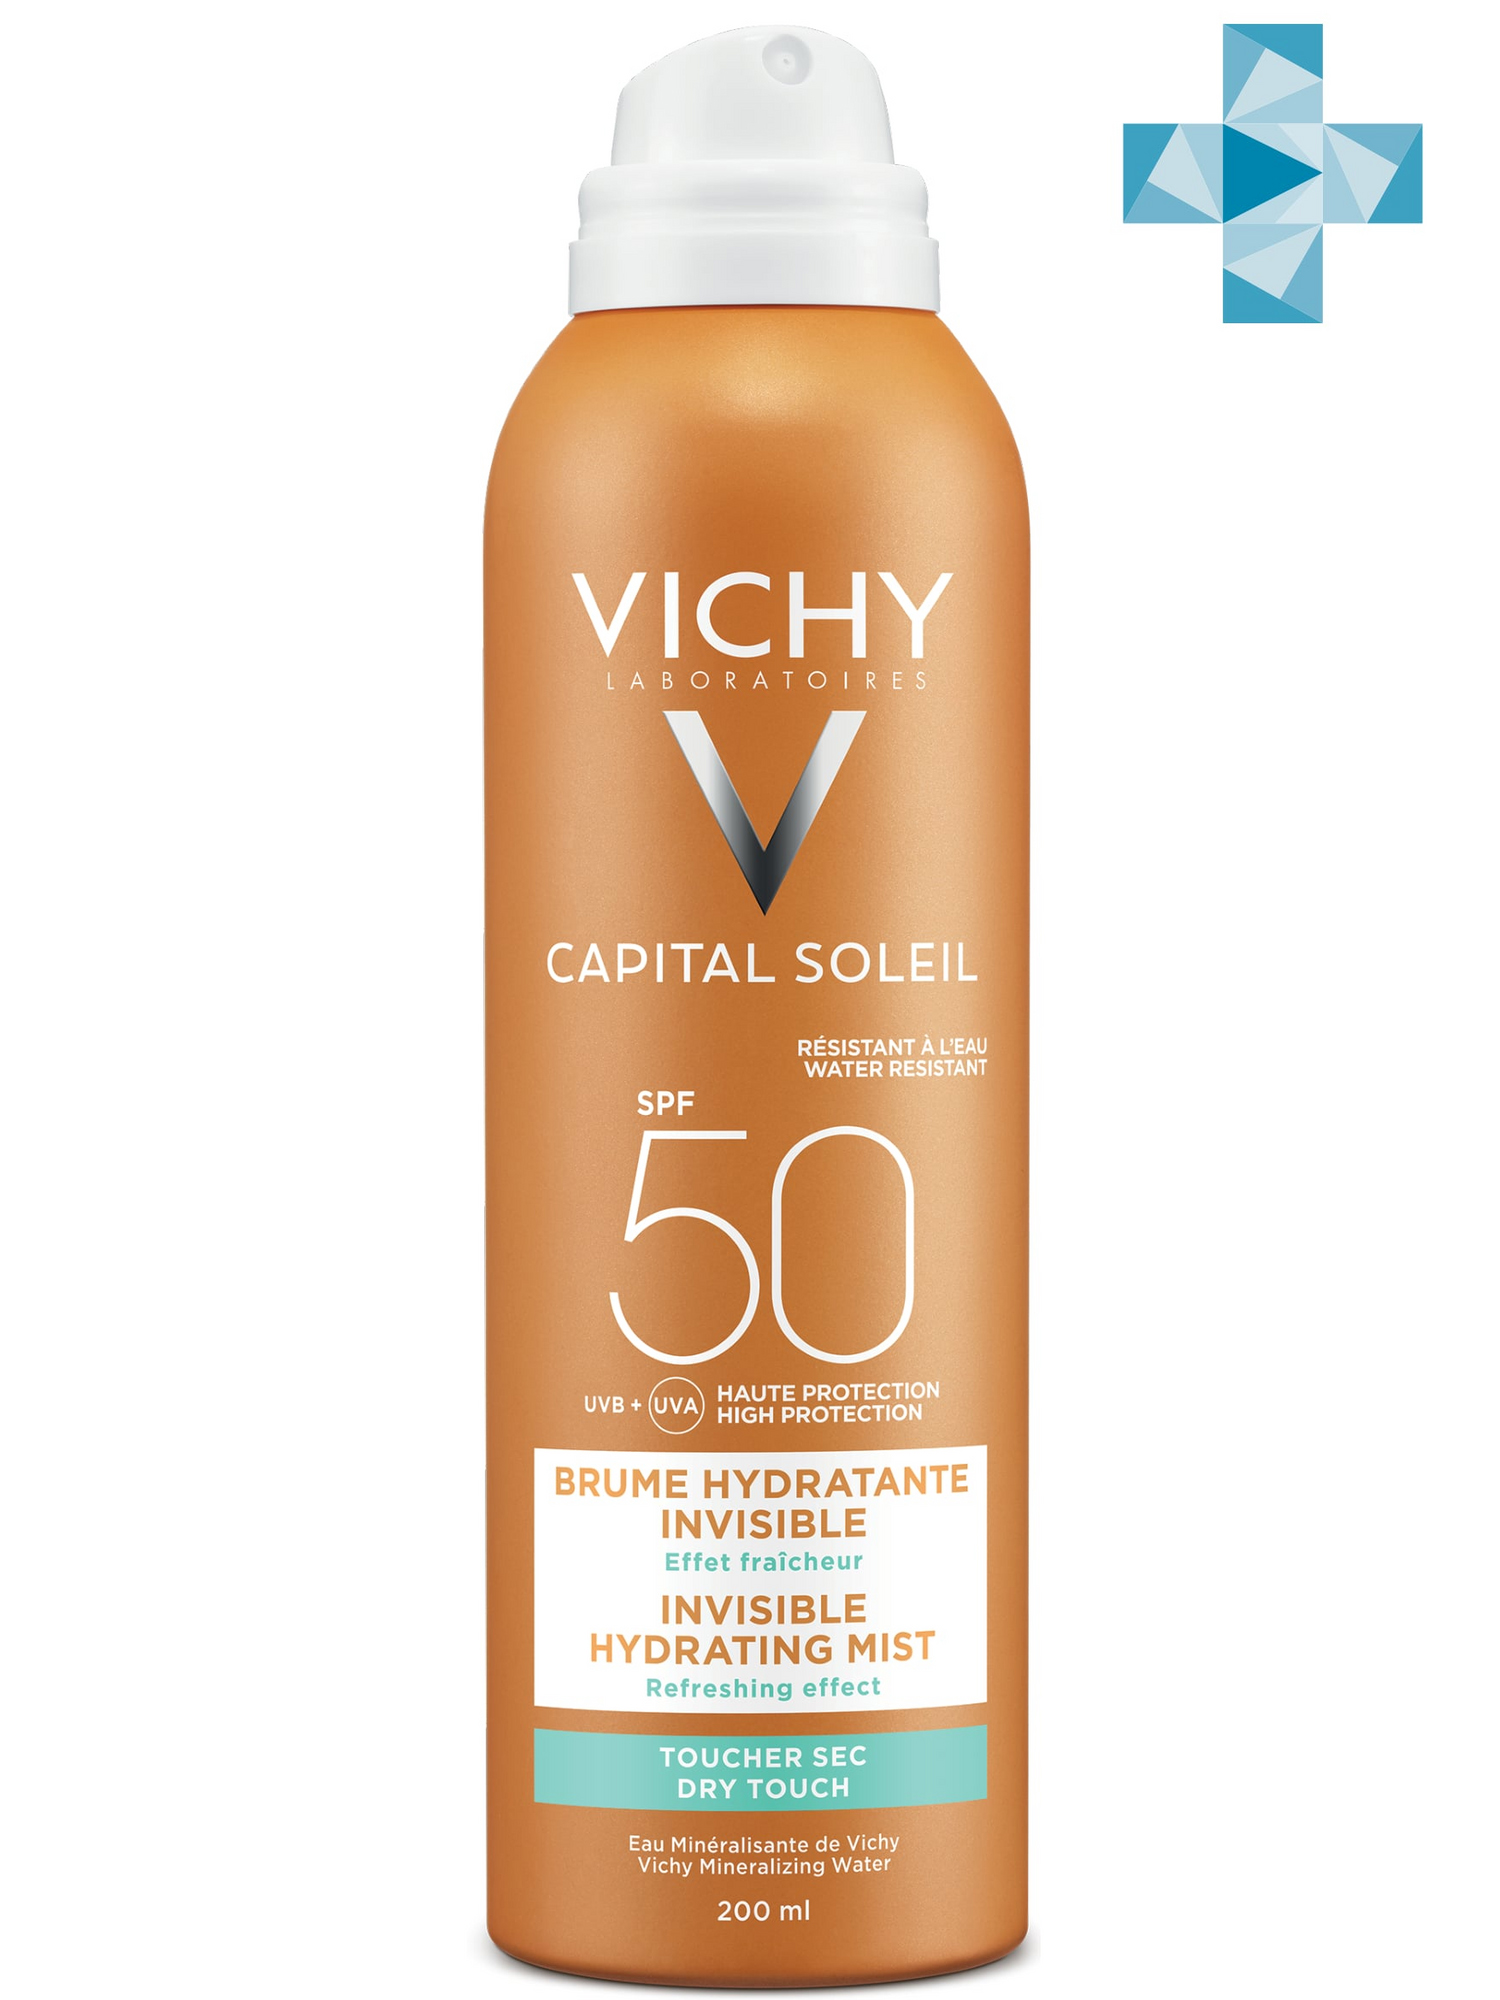 Vichy Солнцезащитный увлажняющий спрей-вуаль SPF 50, 200 мл (Vichy, Capital Soleil)